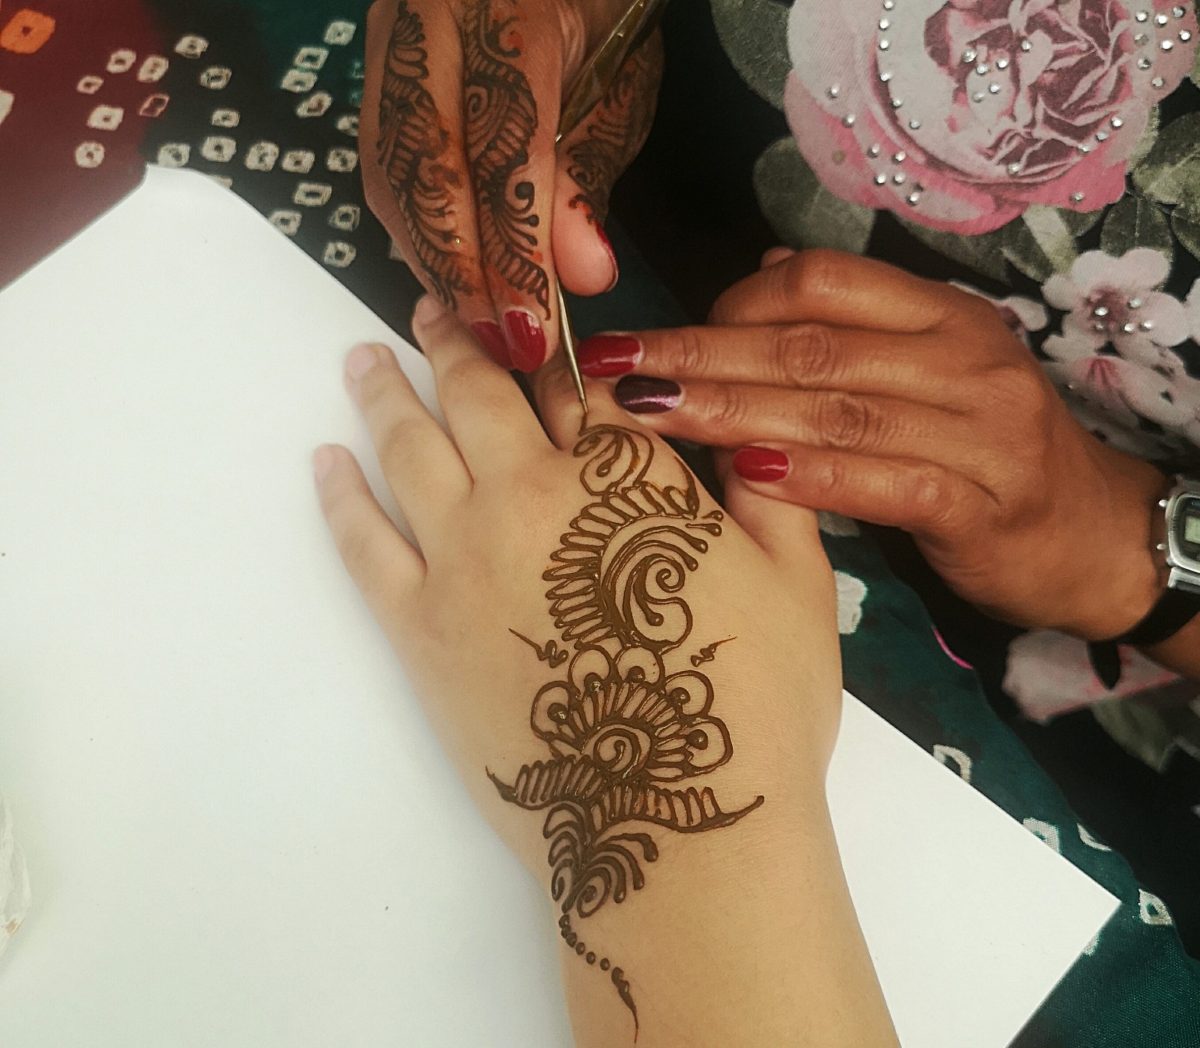 woman doing henna tattoo on a child's hand